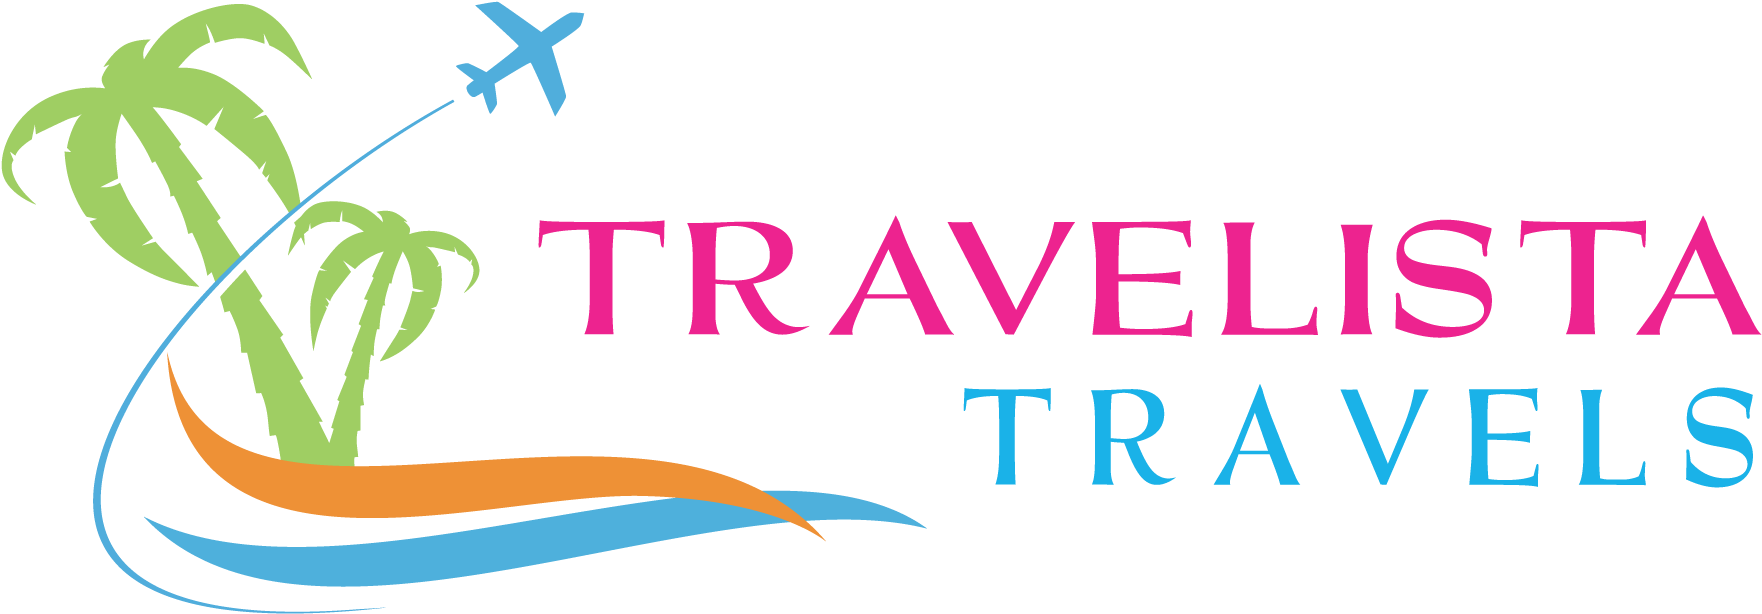 Intui travel. Логотип путешествия. Тревел логотип. Логотип Travel путешествия. Магазин путешествий эмблема.